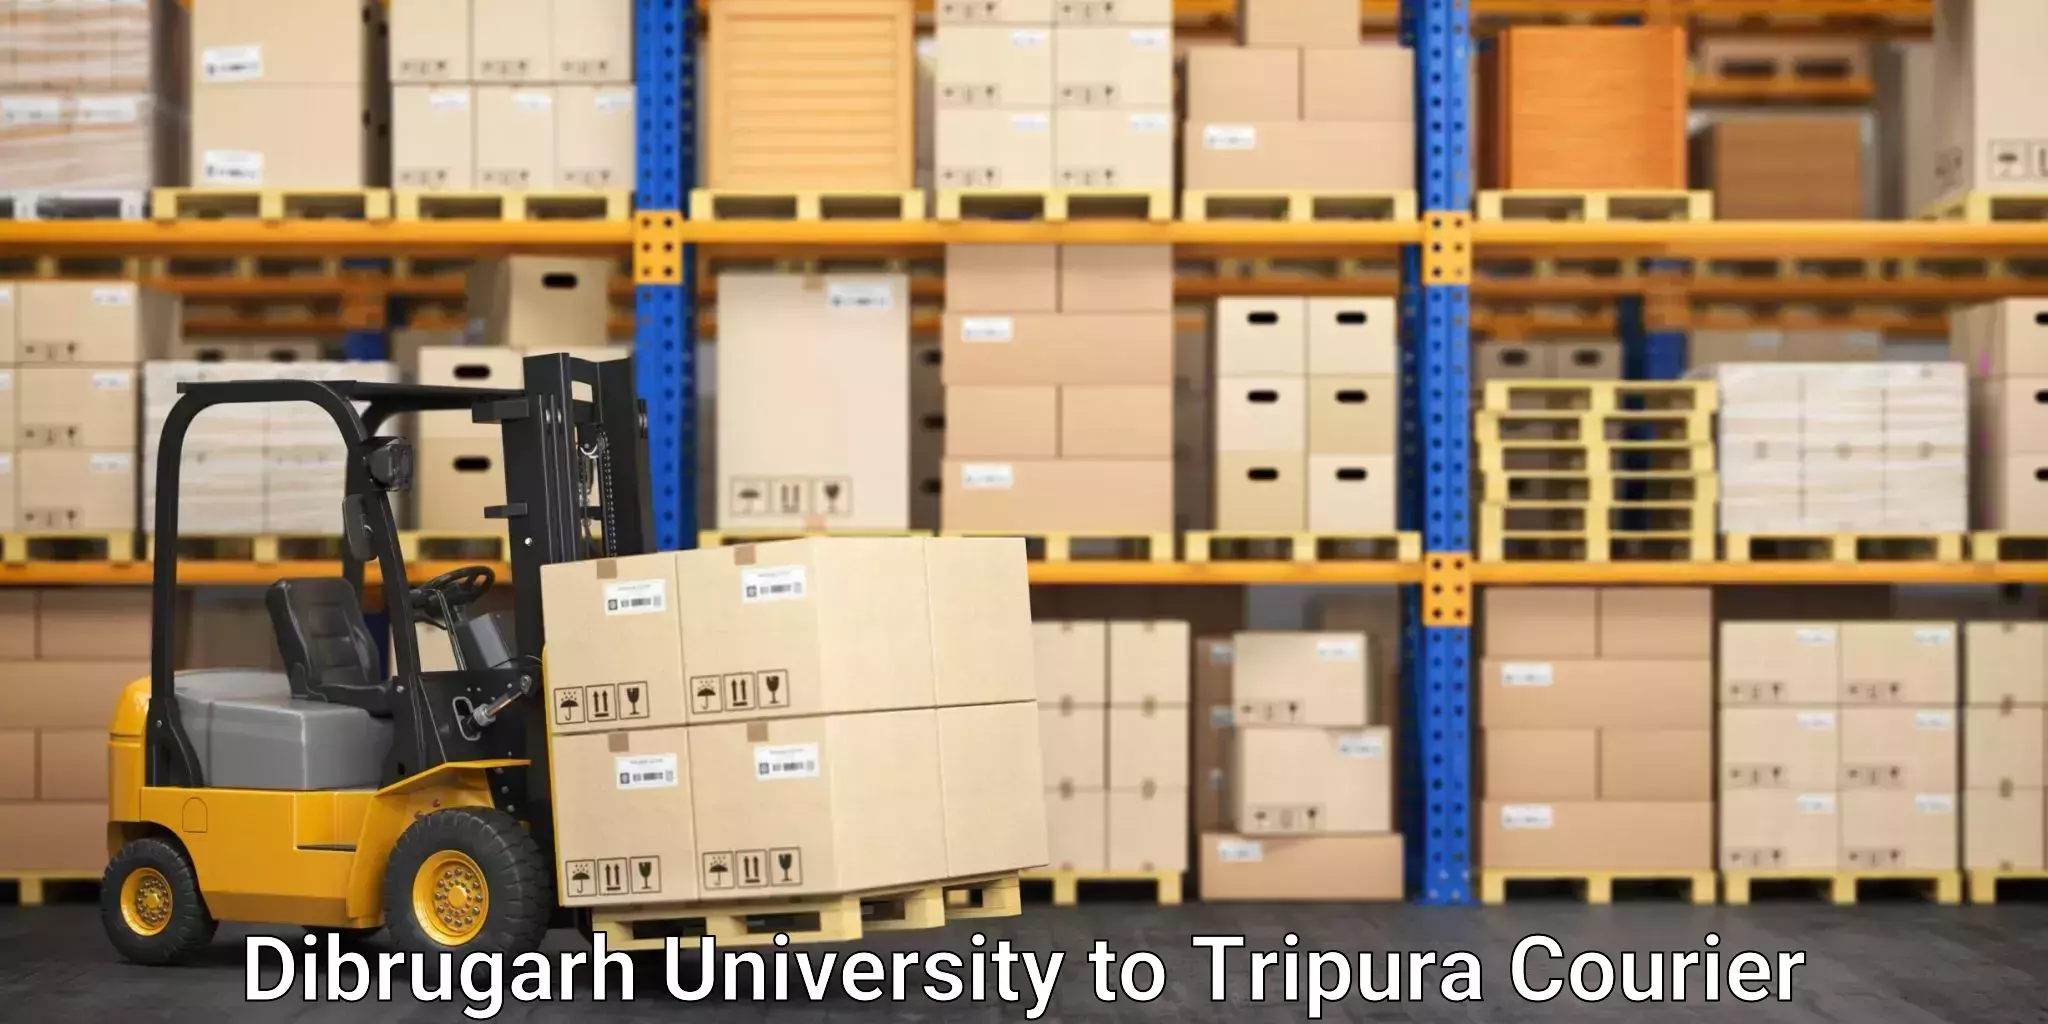 Express logistics service in Dibrugarh University to Kamalpur